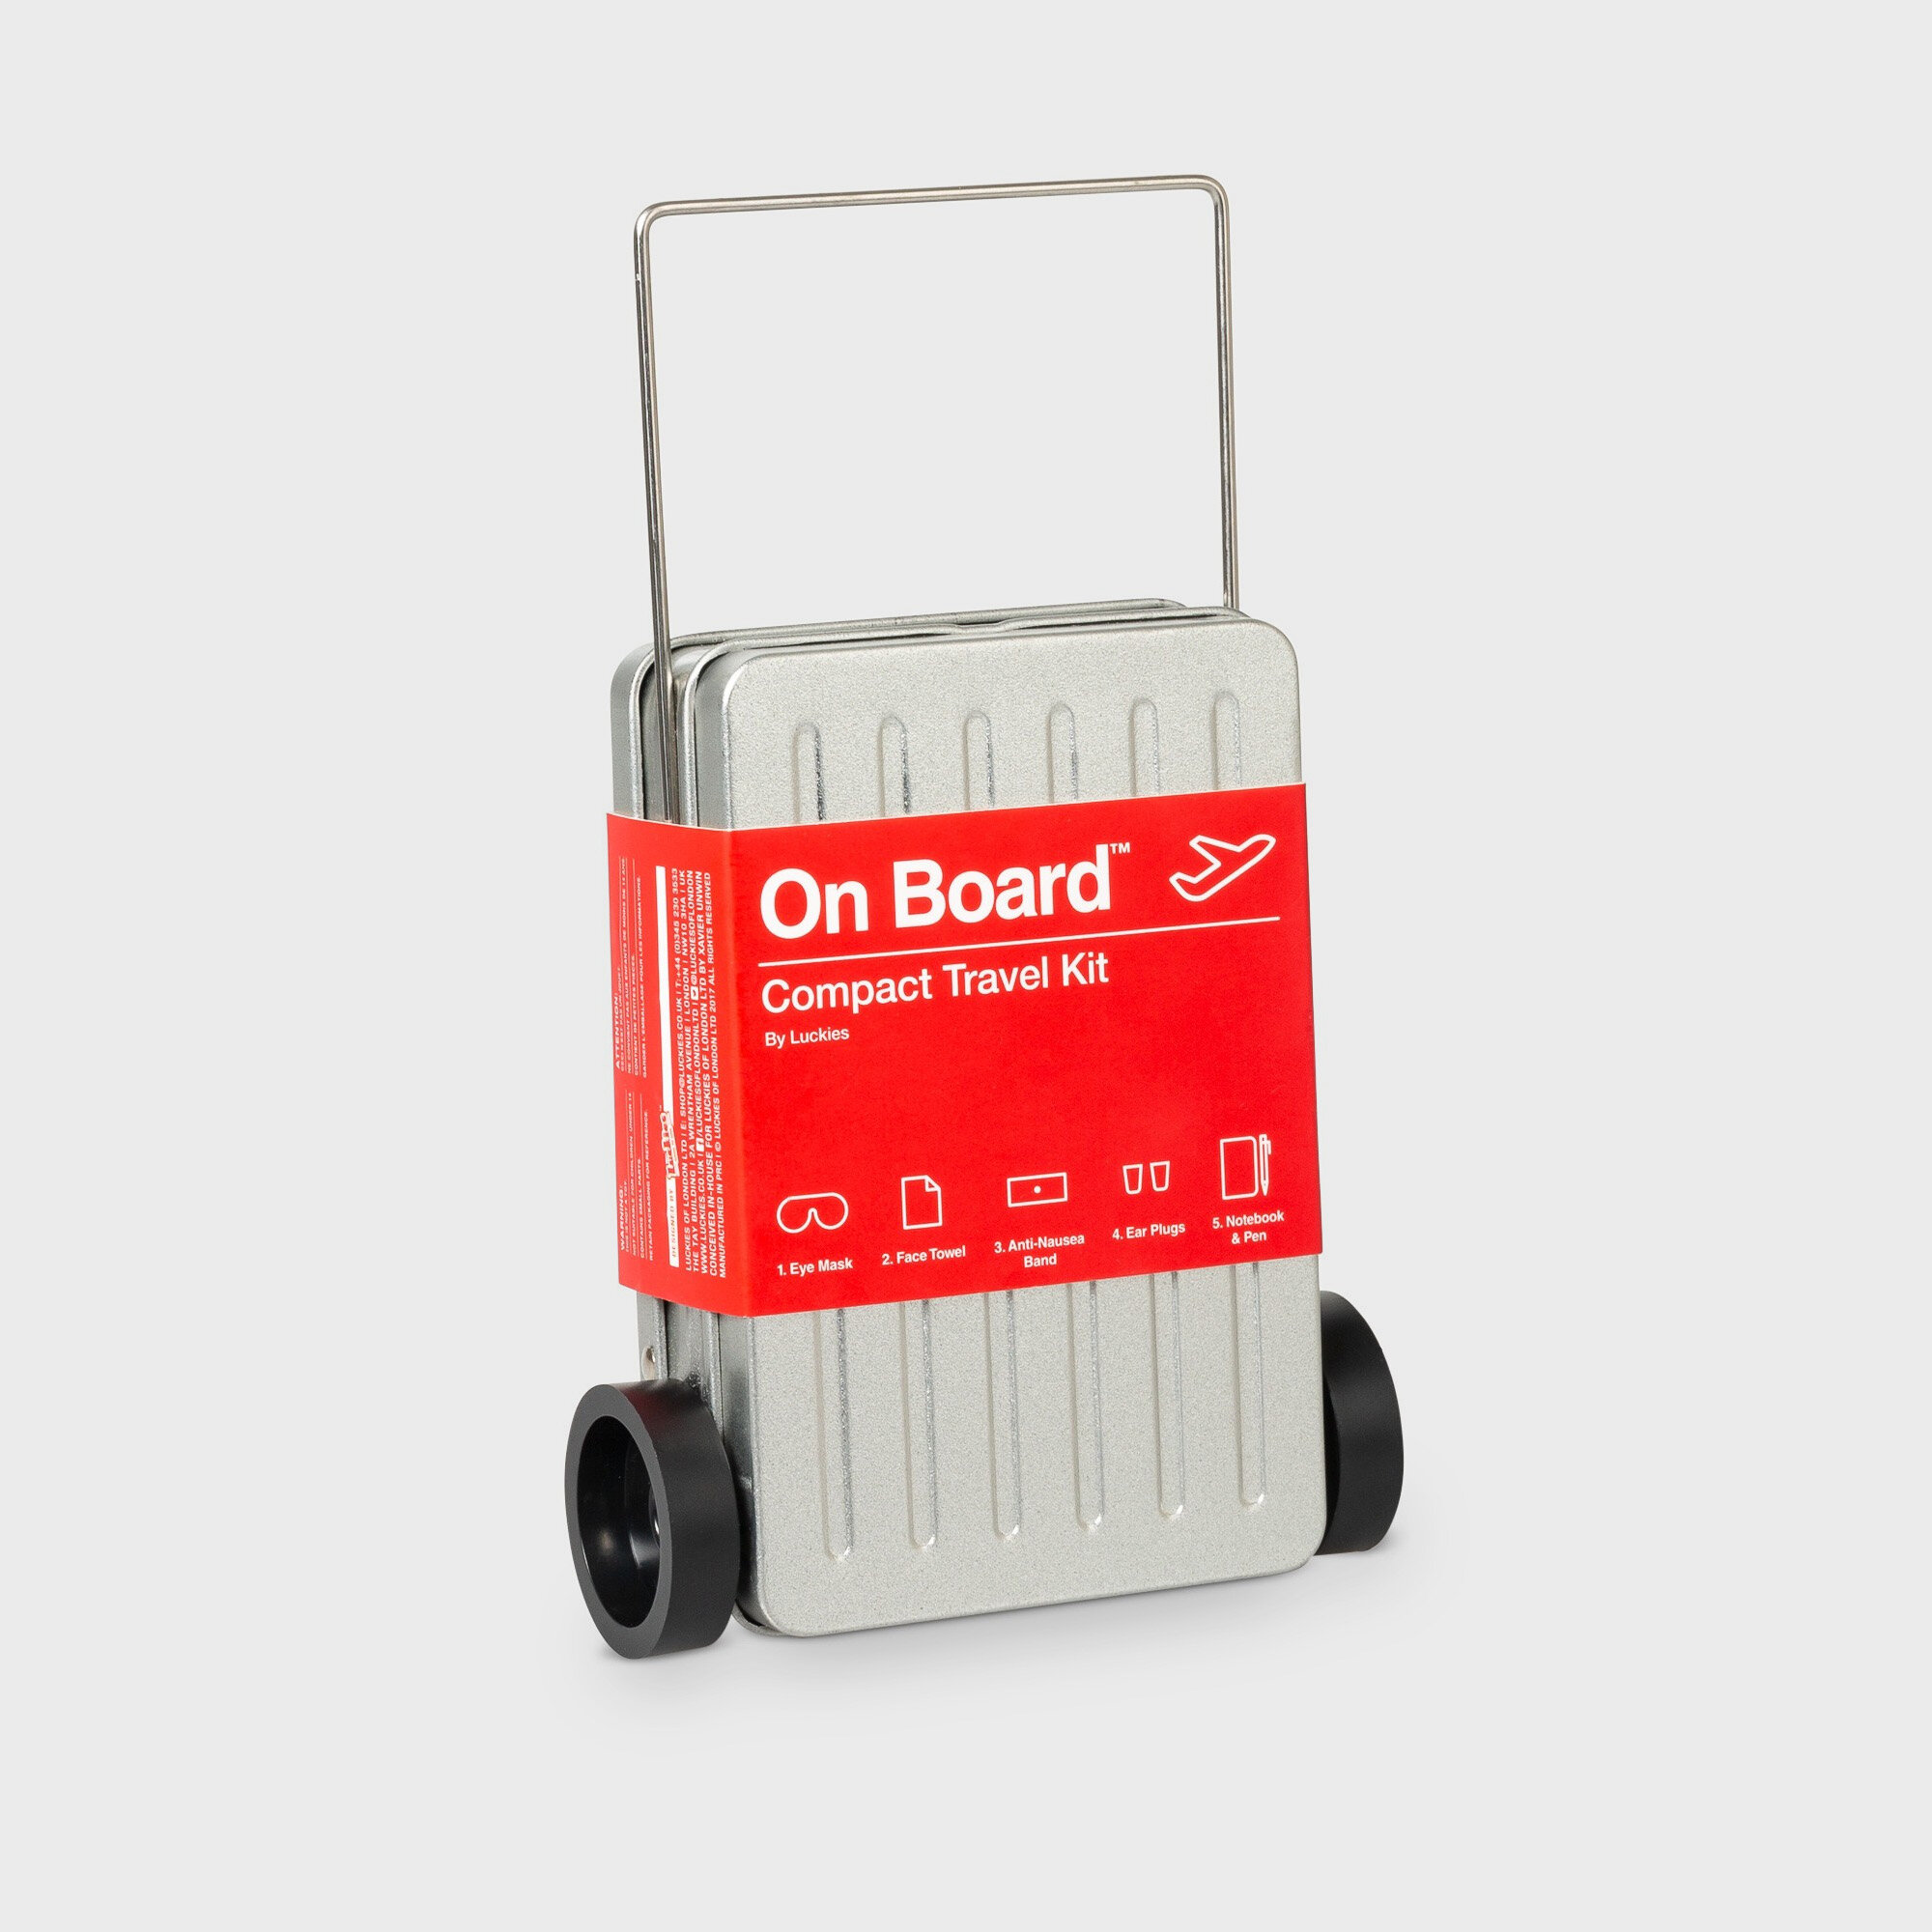 On Board - Travel Kit in Mini Suitcase